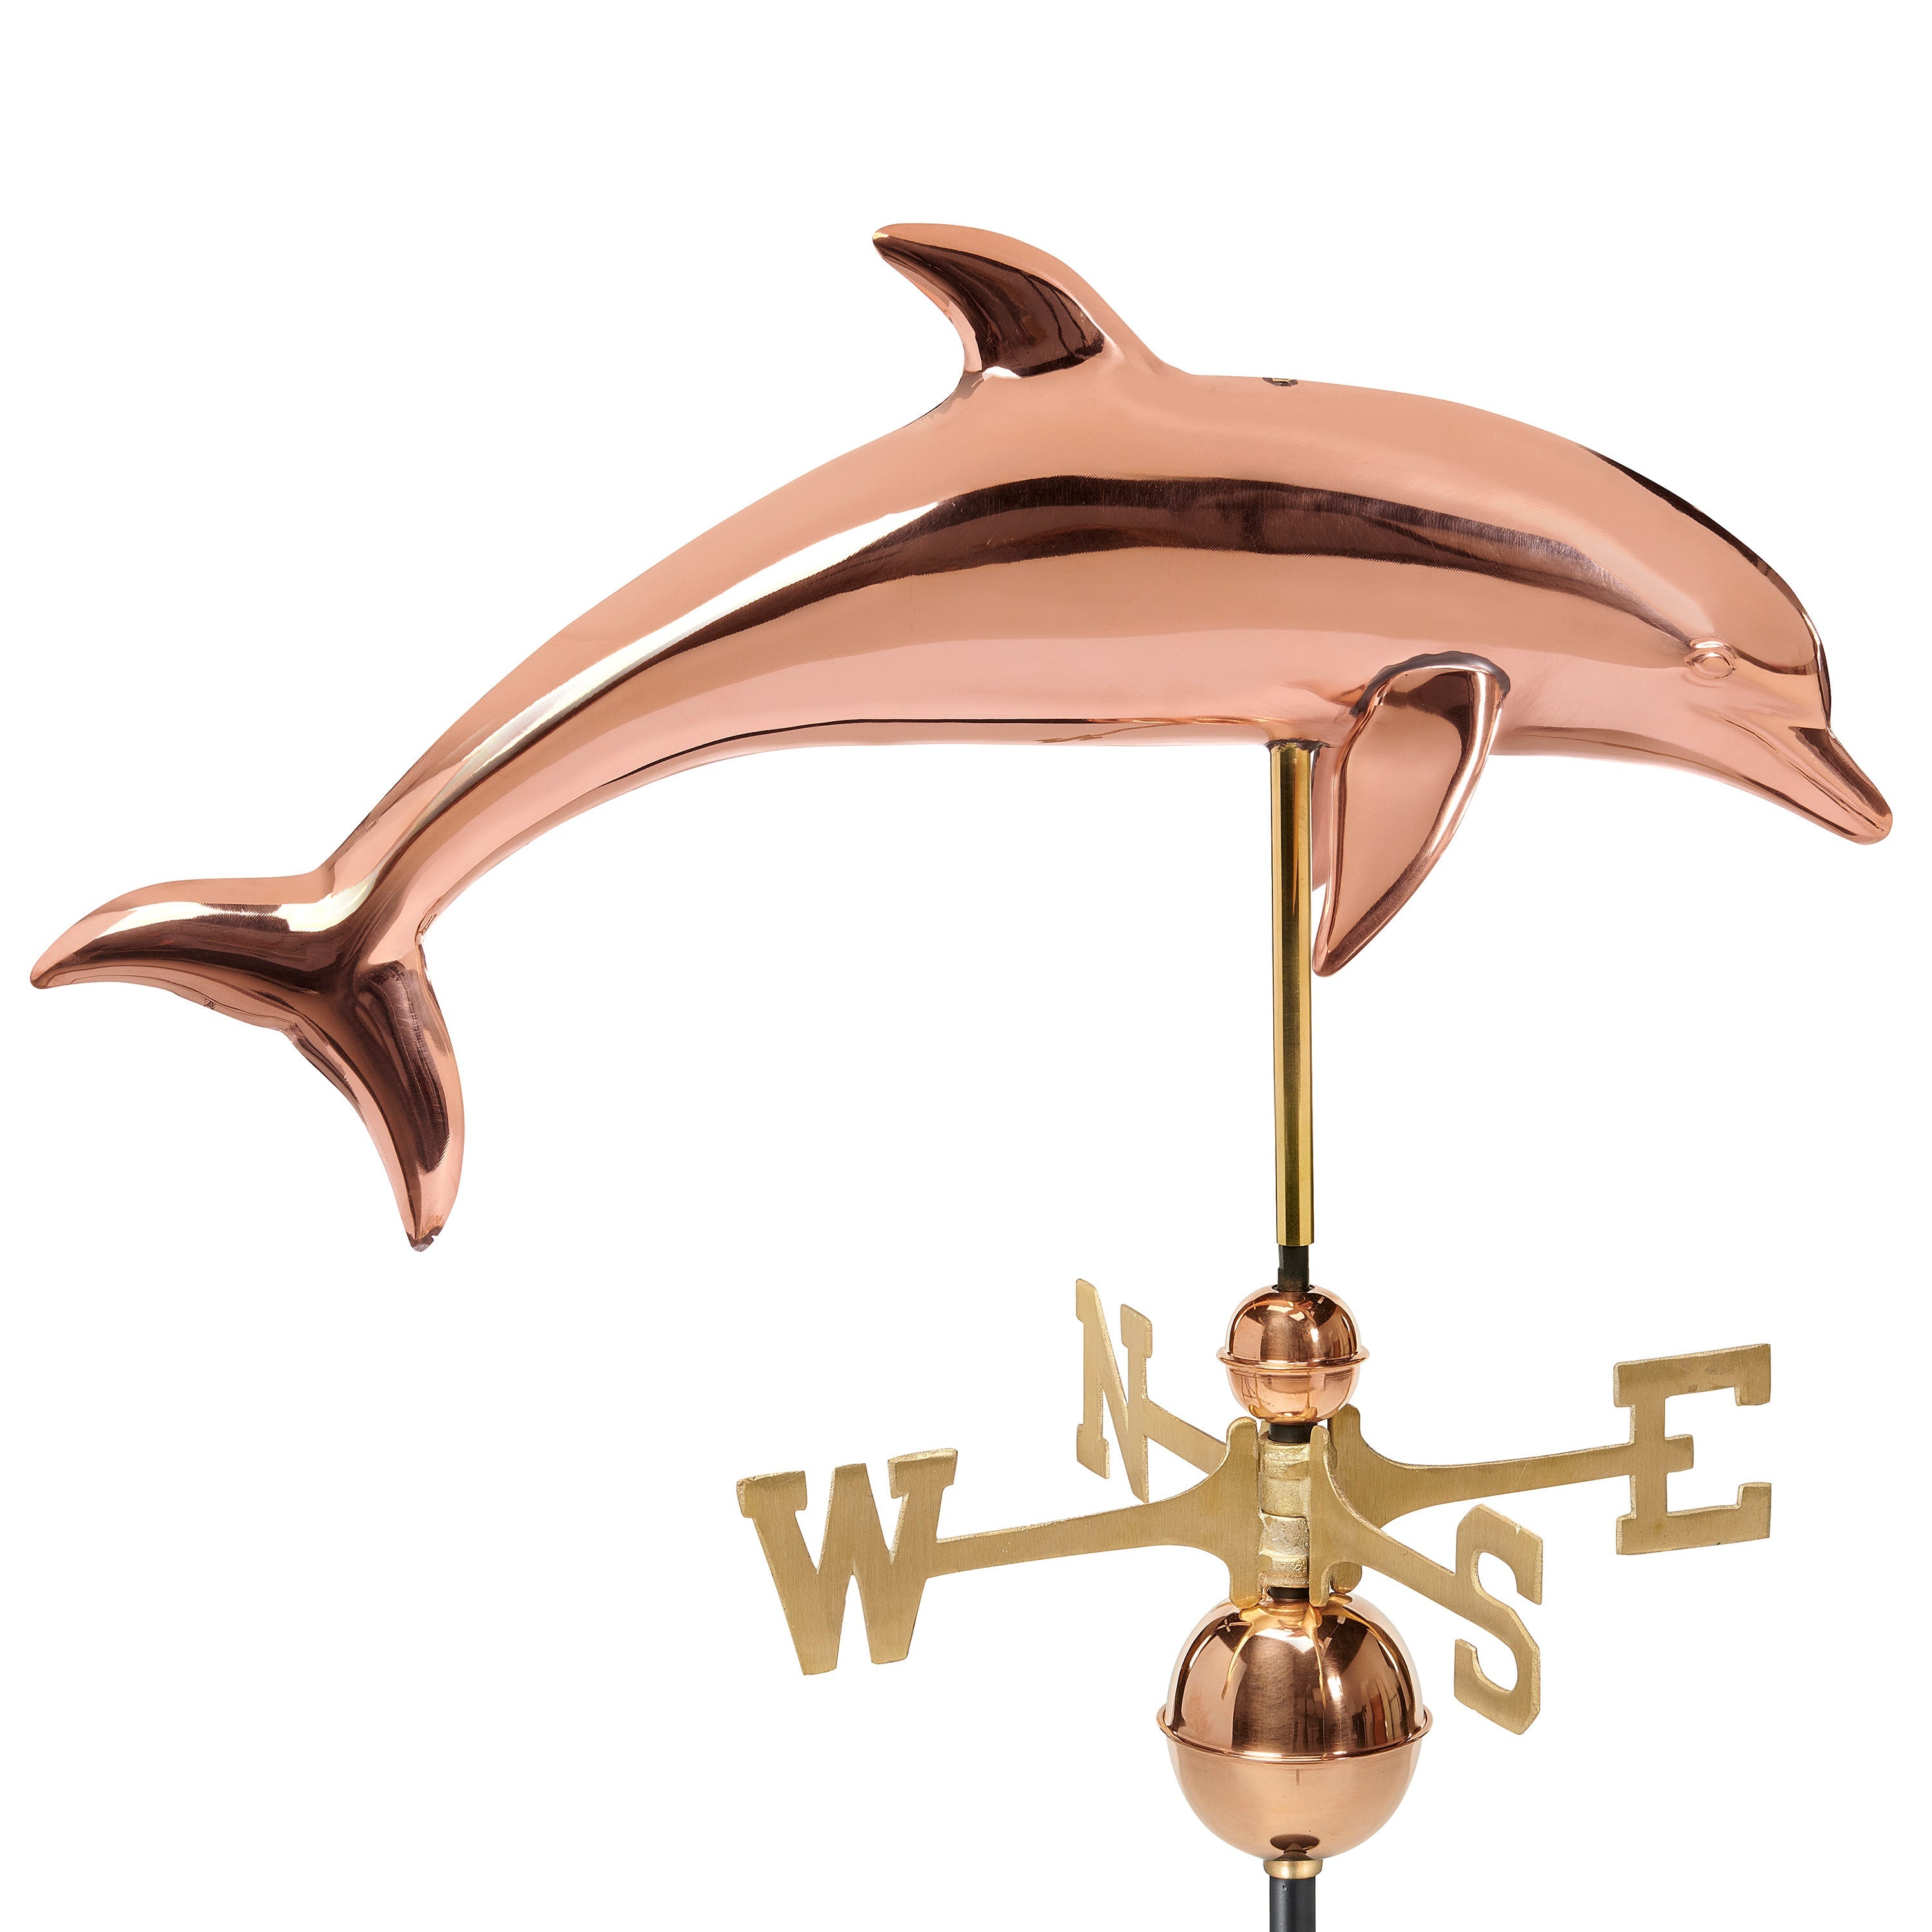 Dolphin Weathervane - Slightly Imperfect